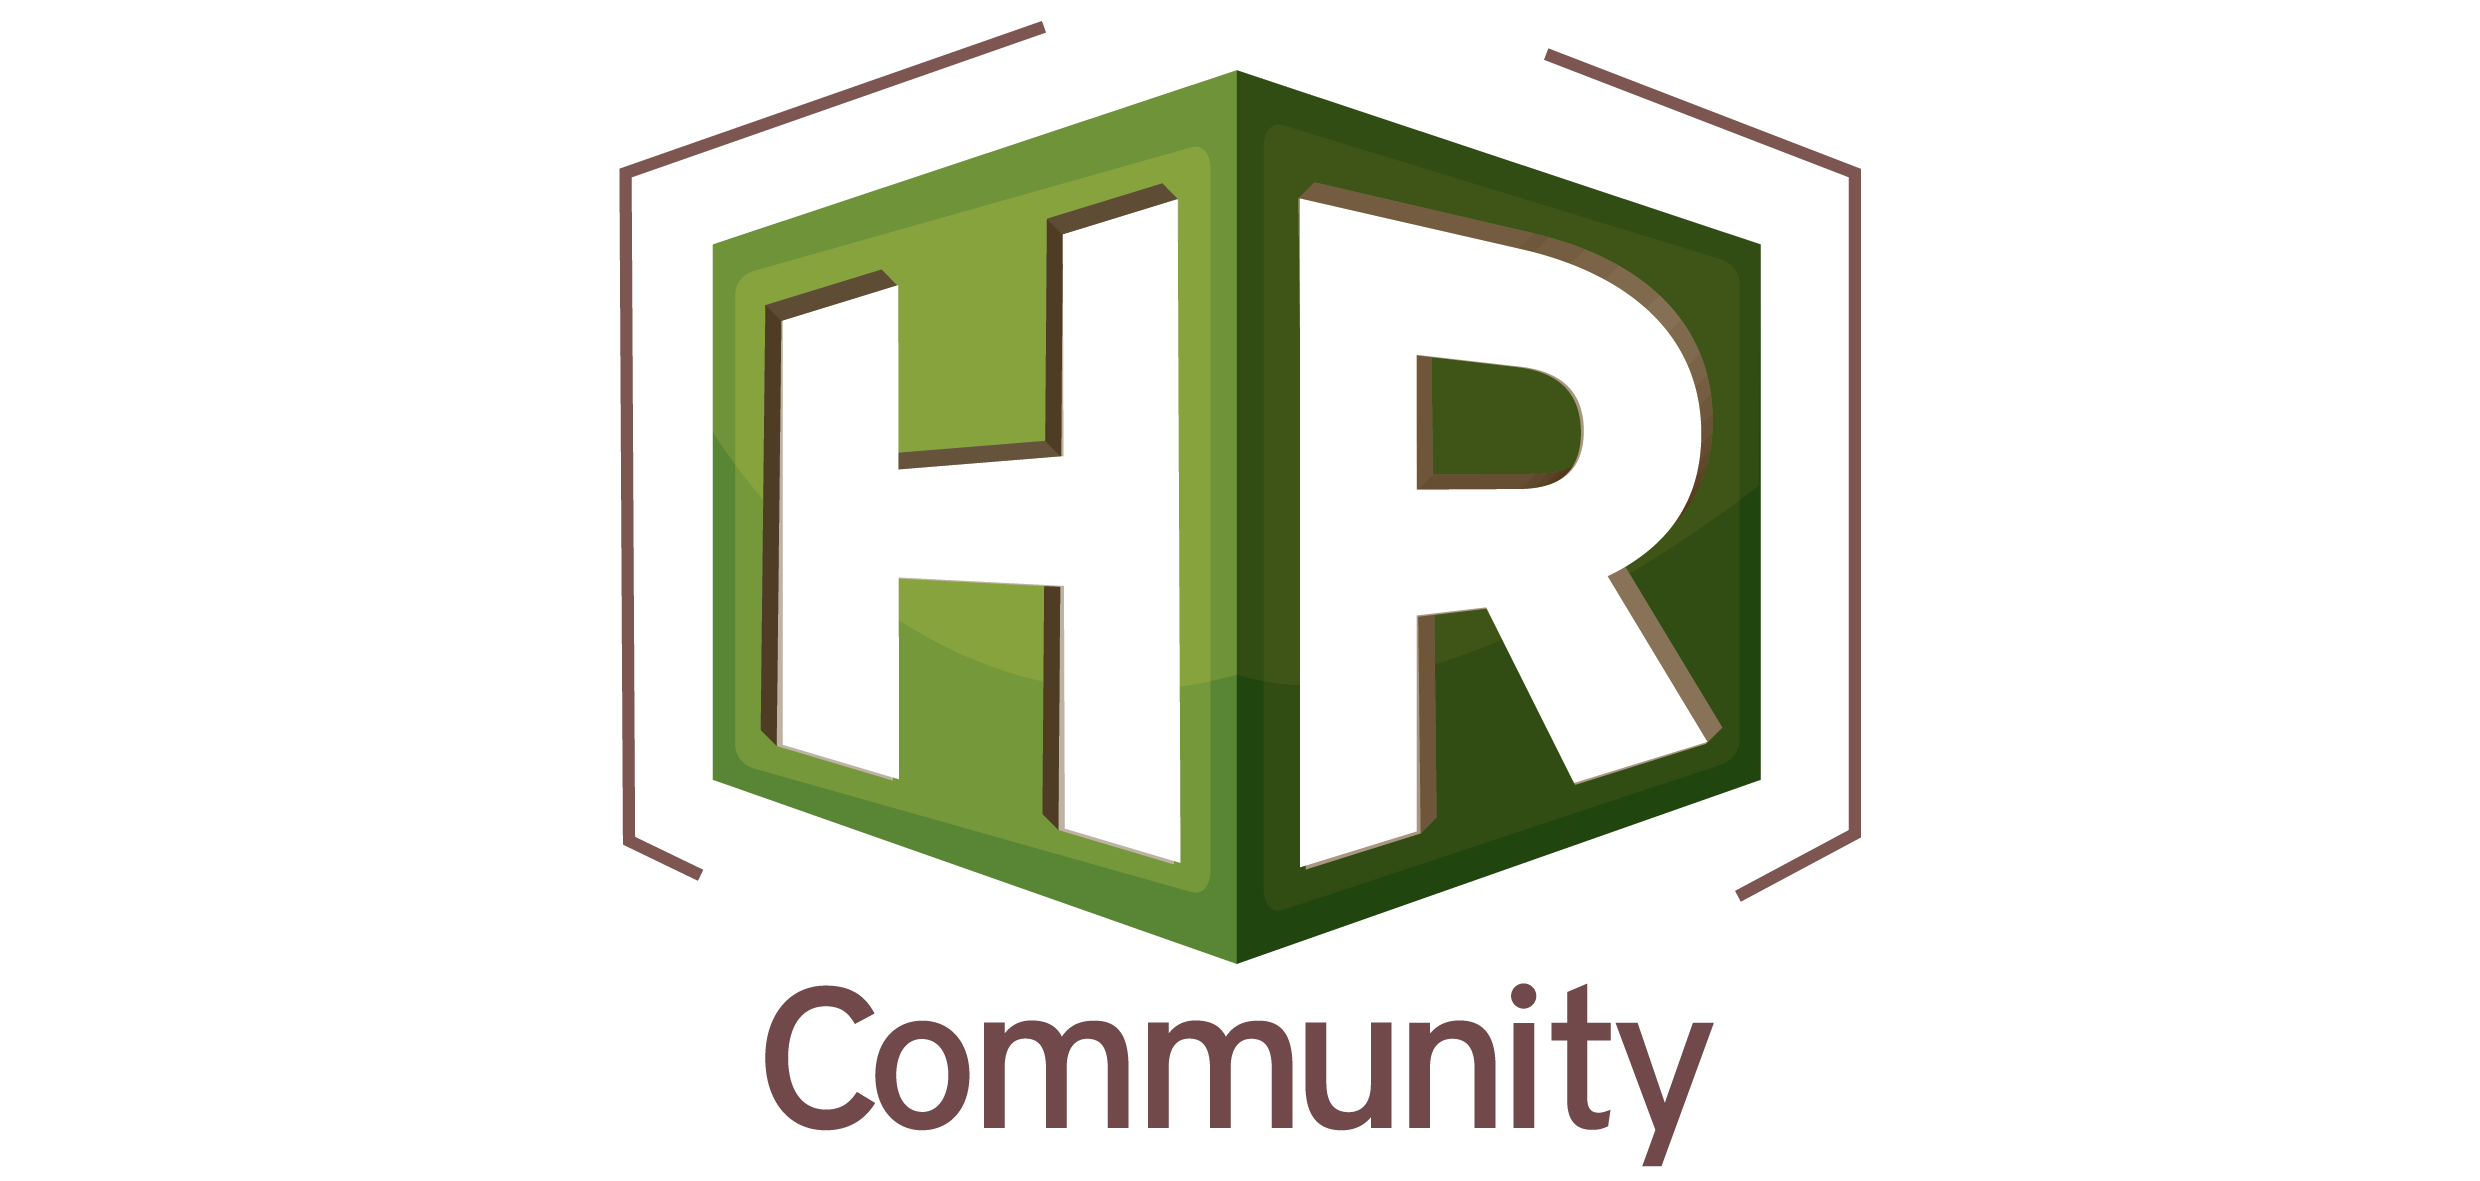 hr community logo png